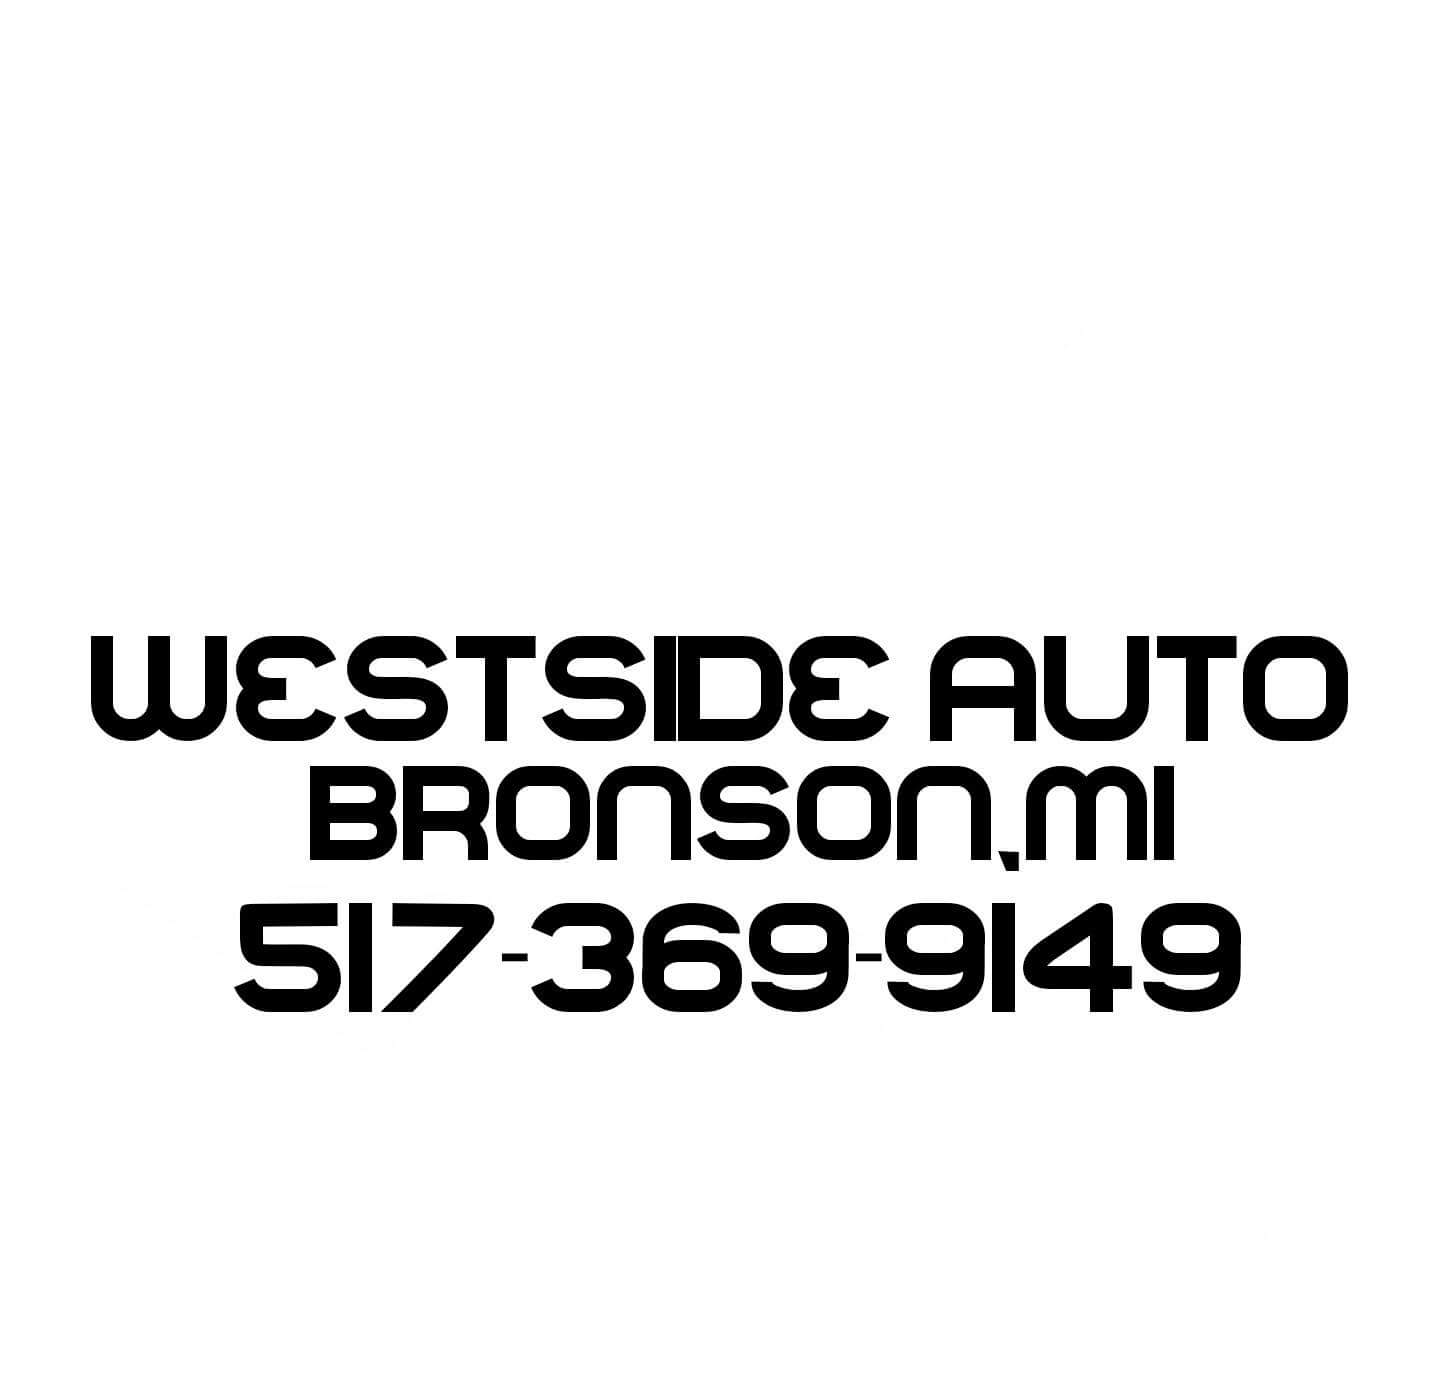 Westside Auto Collision